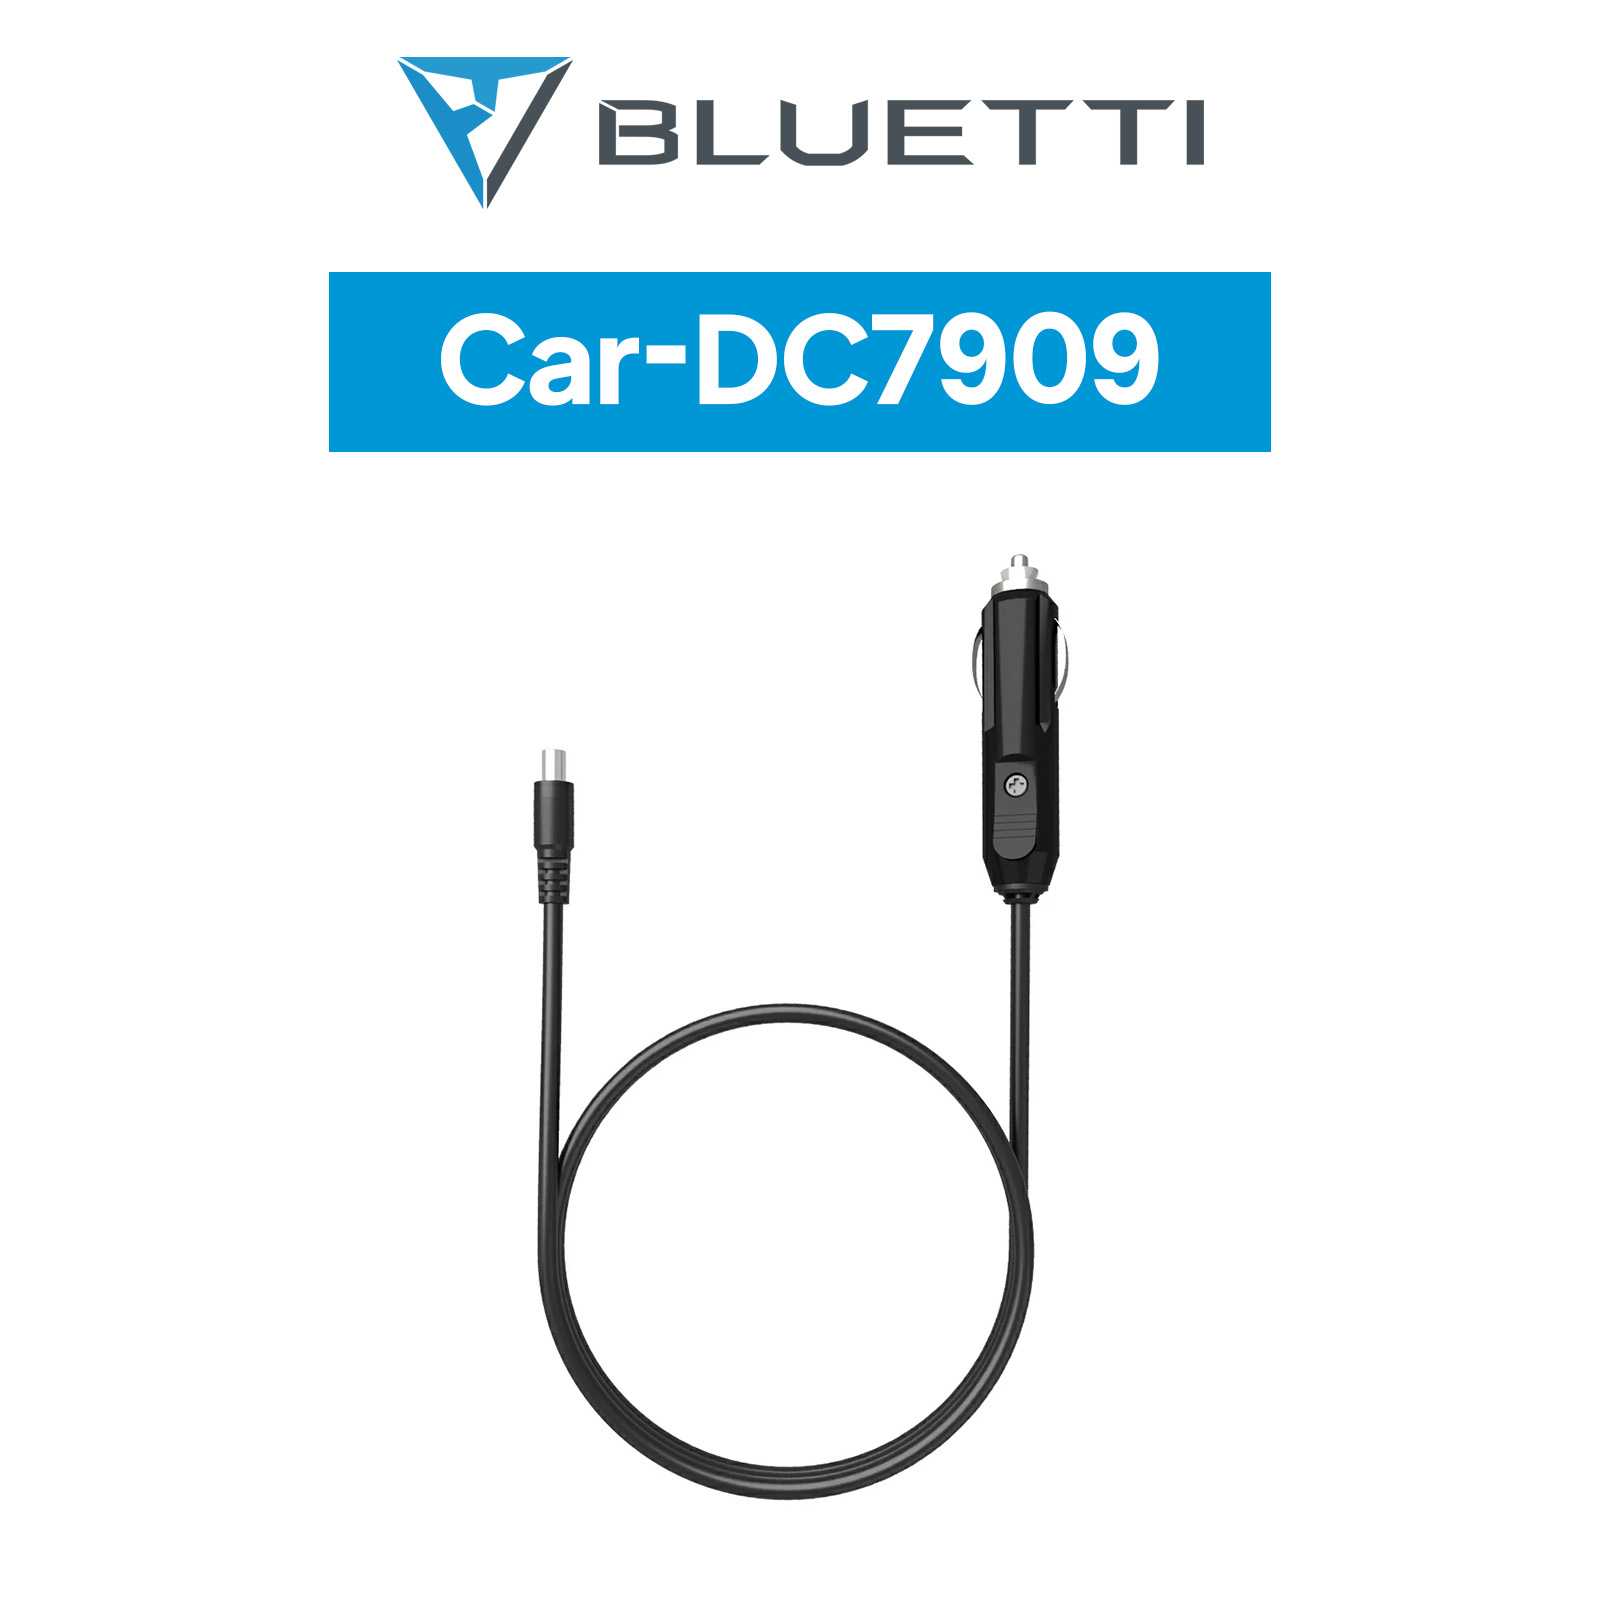 BLUETTI シガーソケット ケーブル AC180/EB70S/EB3A に適用  DC充電 車載充電 ポータブル電源用 カー充電 ポート7909